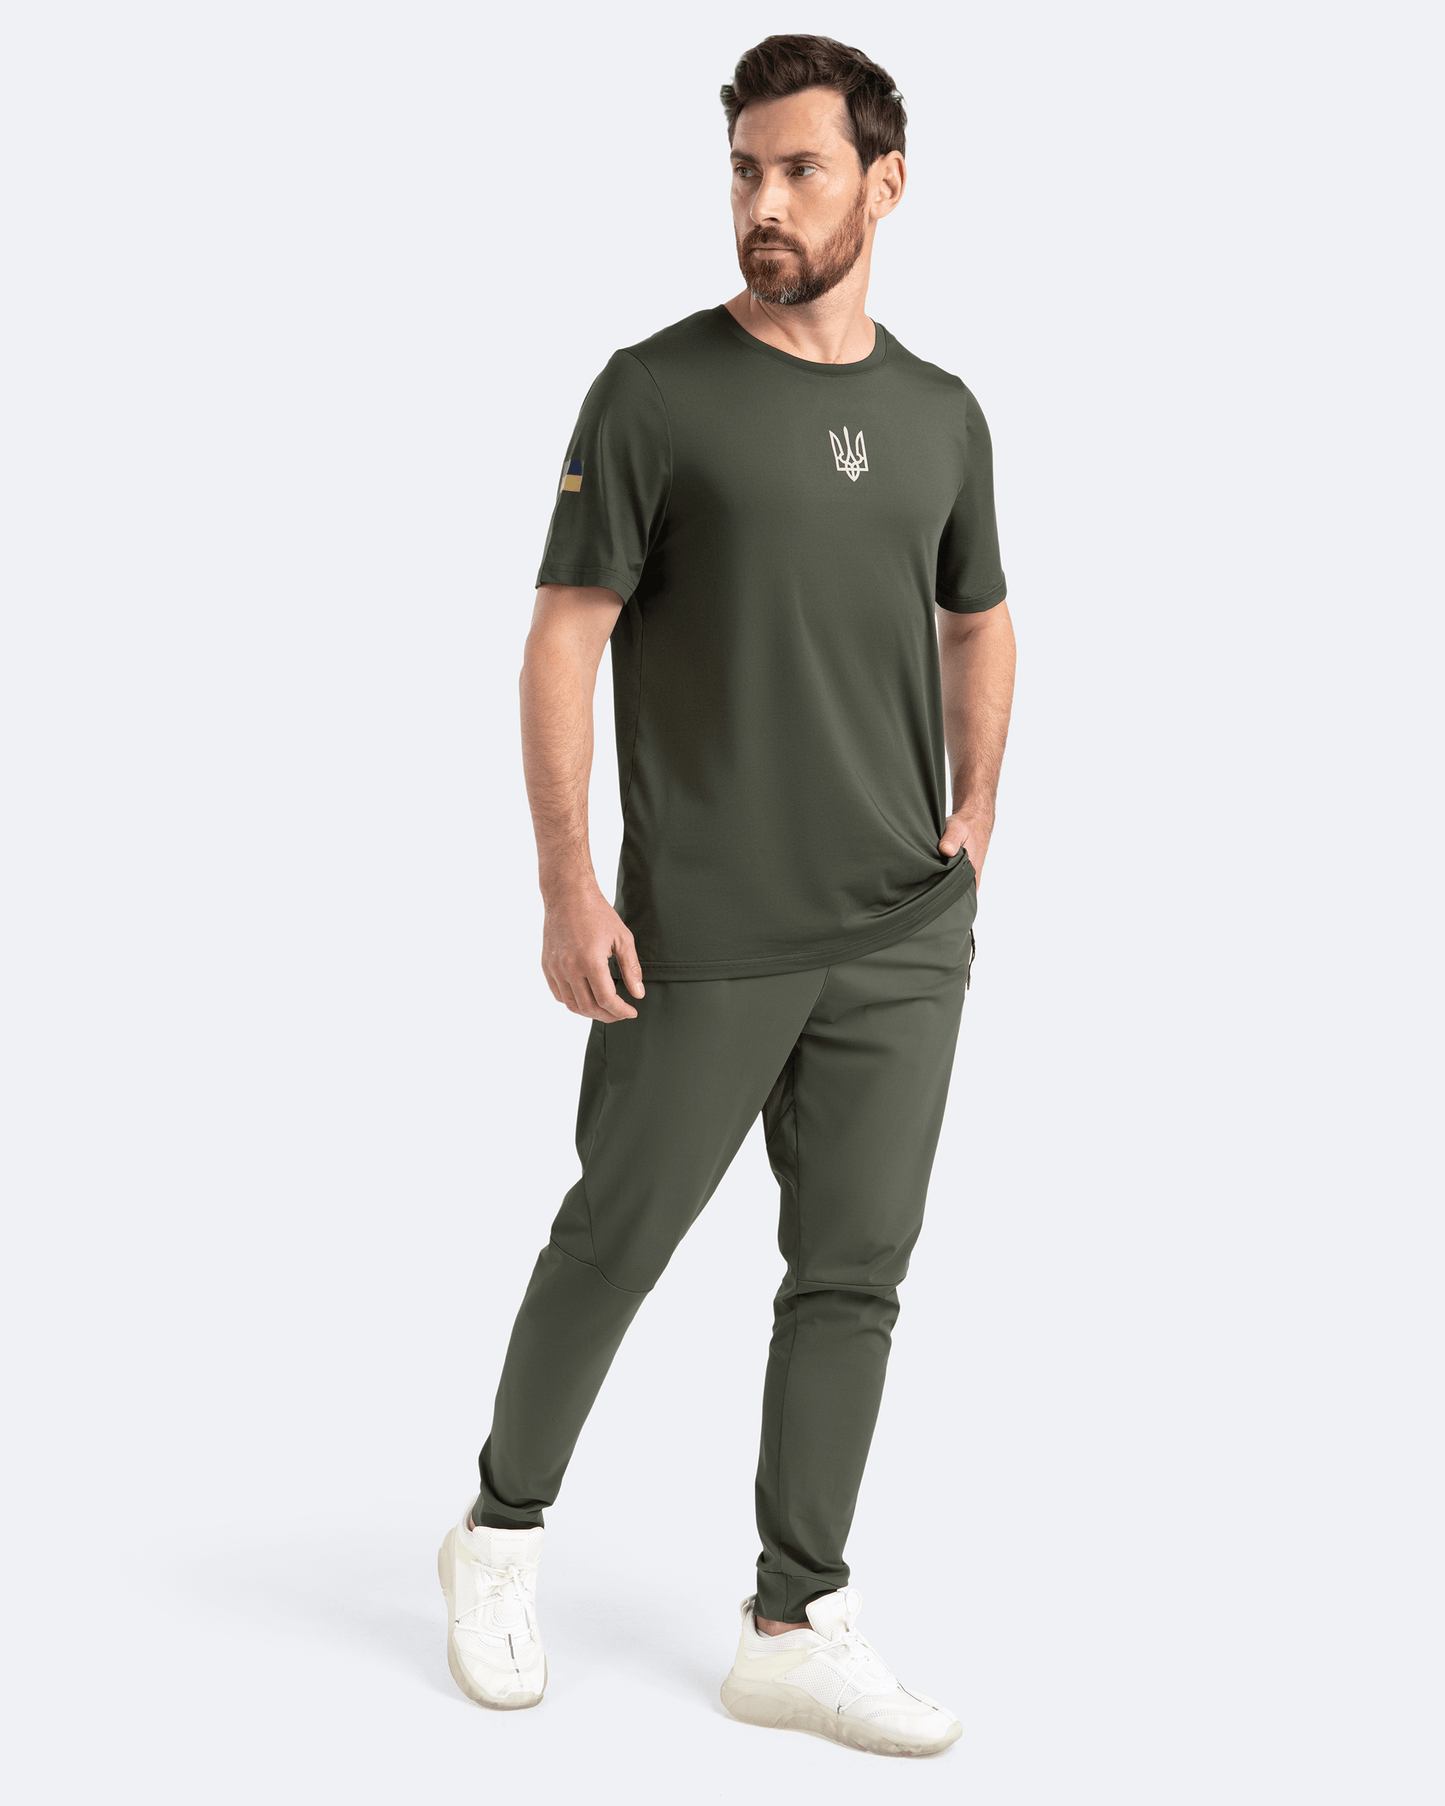 Khaki Green Matching Joggers & T-shirt set